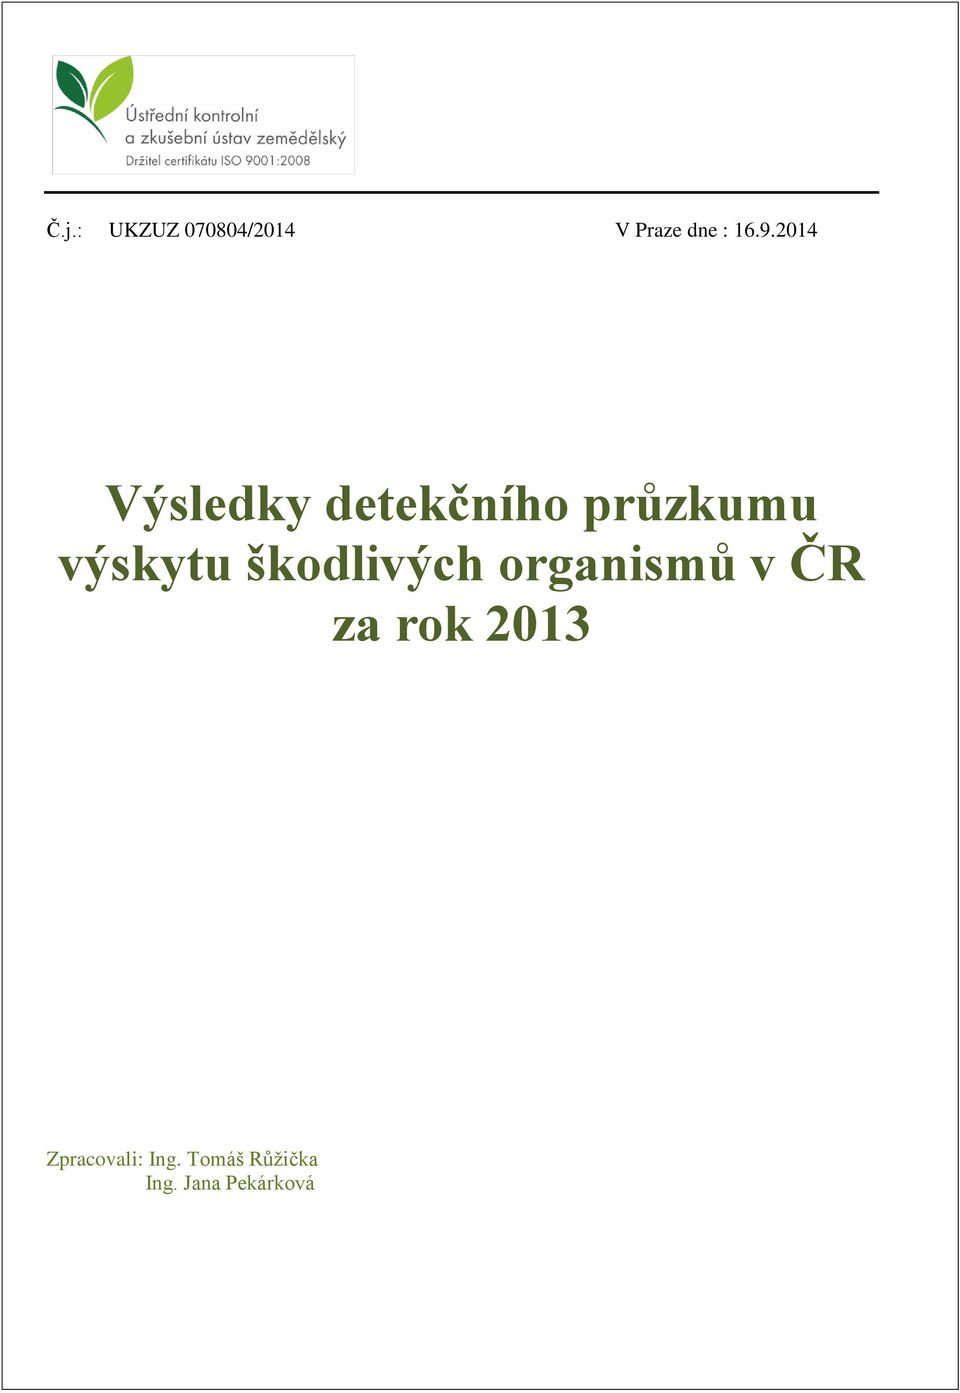 škodlivých organismů v ČR za rok 2013